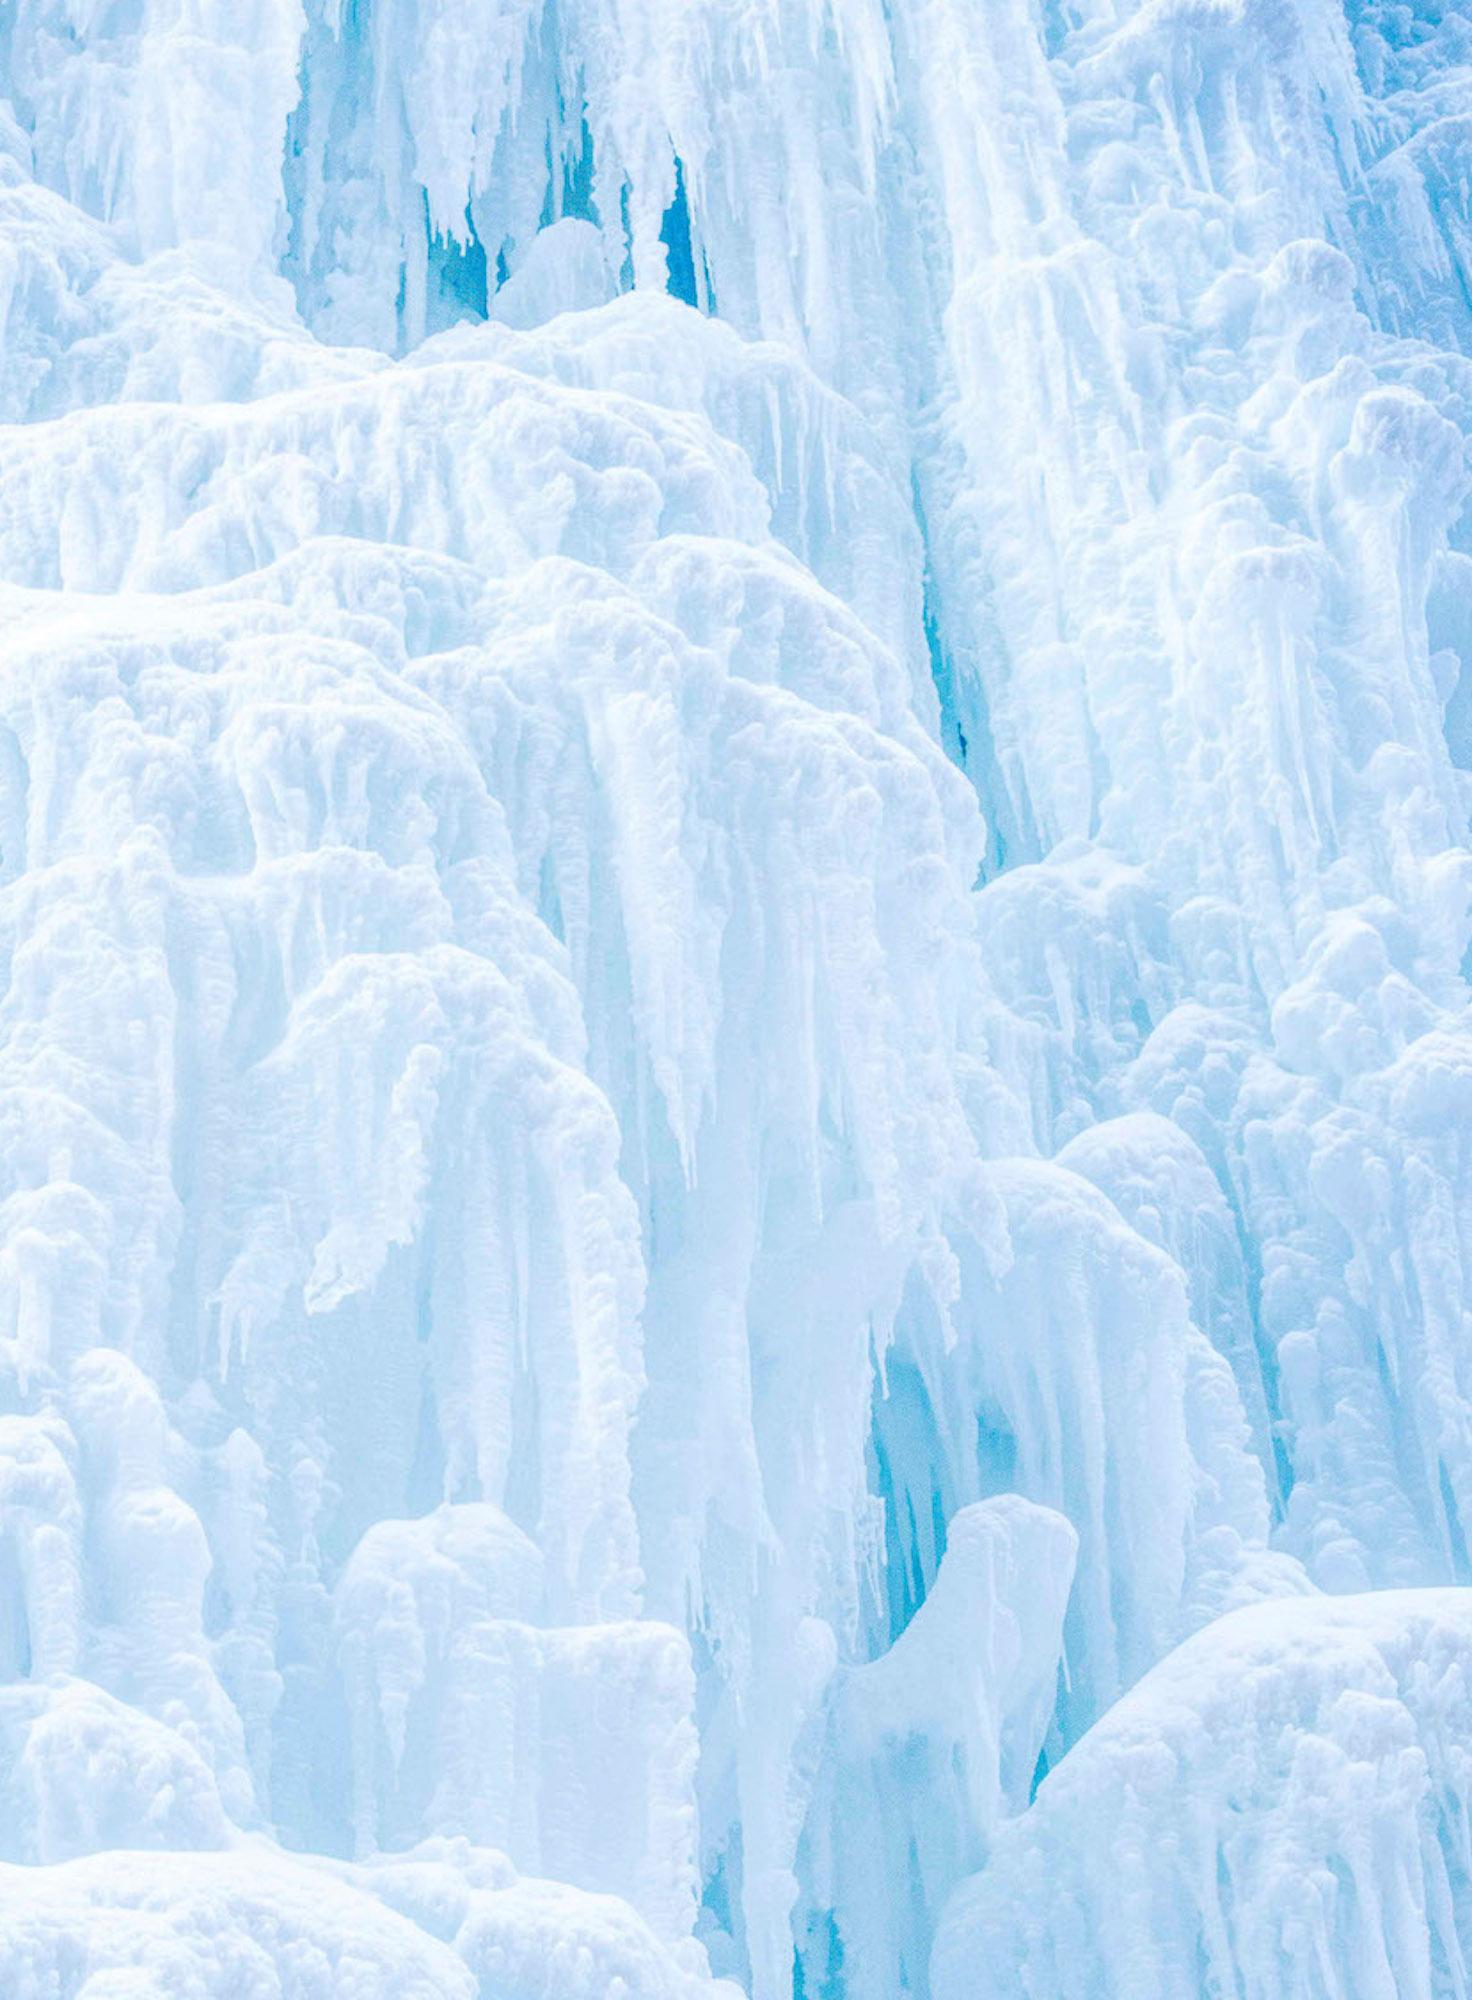 Frozen Waterfall by Luca Marziale - Landscape photography, winter, snowy, white For Sale 1